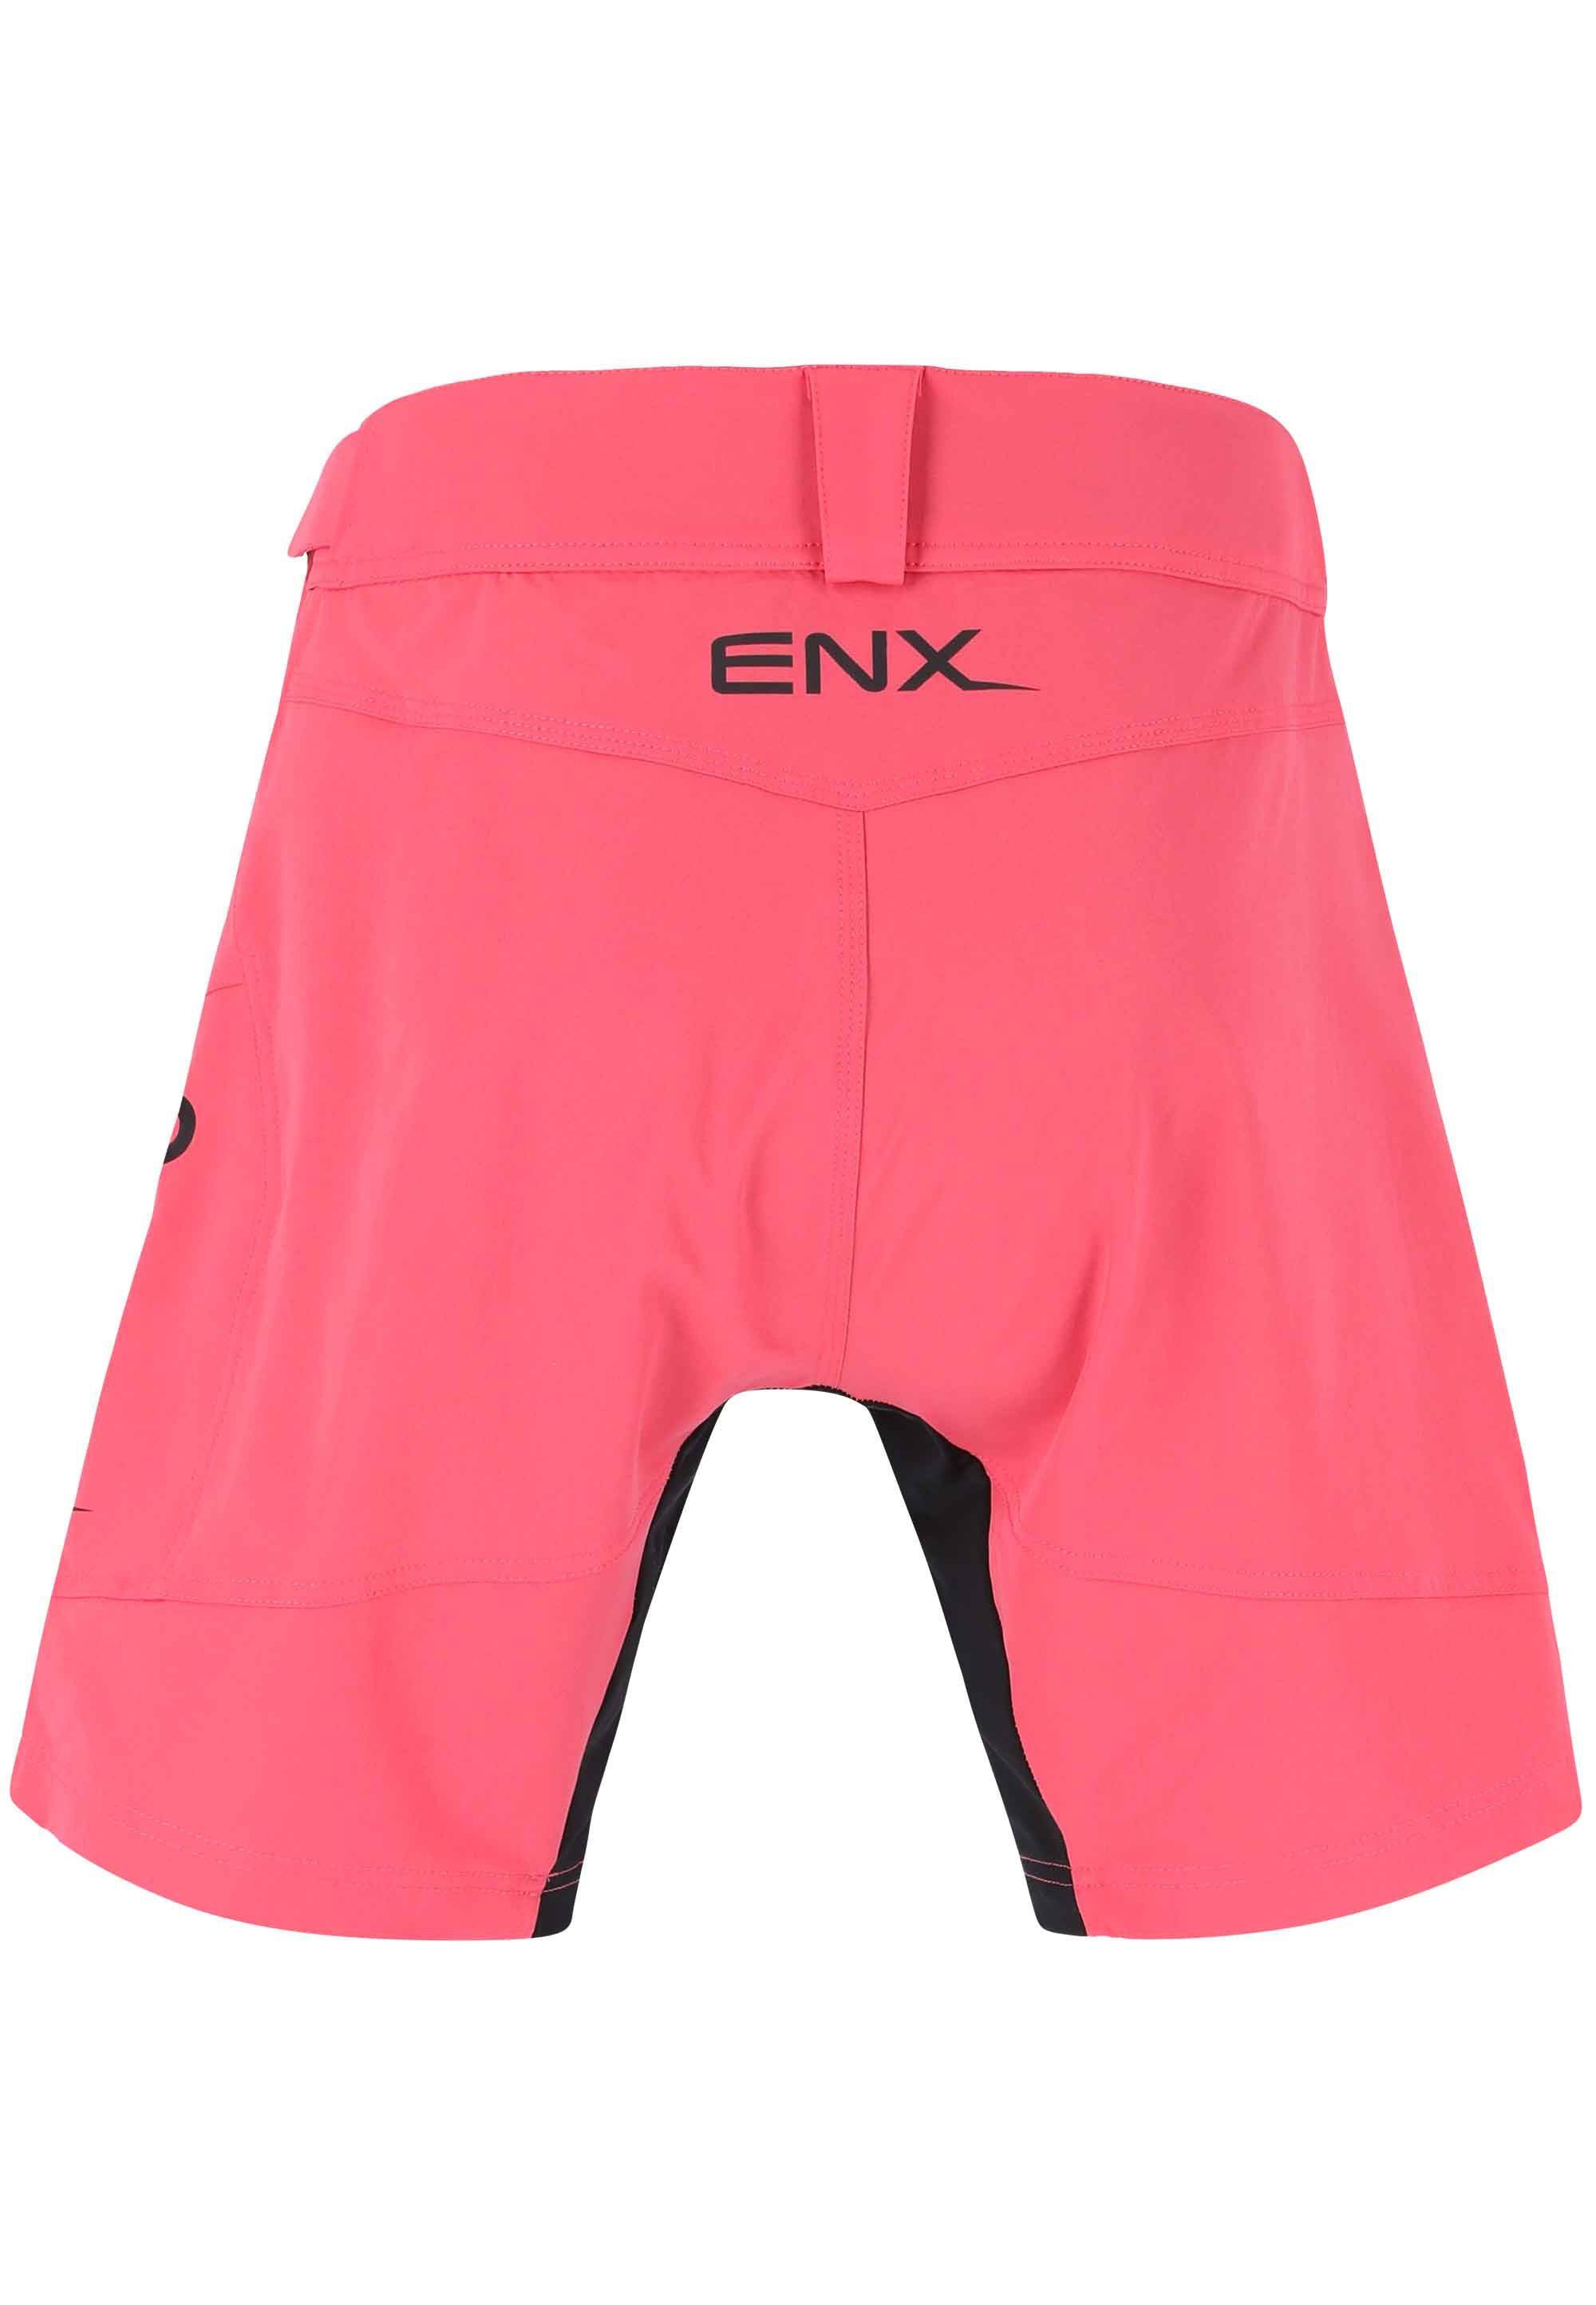 ENDURANCE Radhose Jamilla W 2 1 Shorts mit rosa in herausnehmbarer Innen-Tights